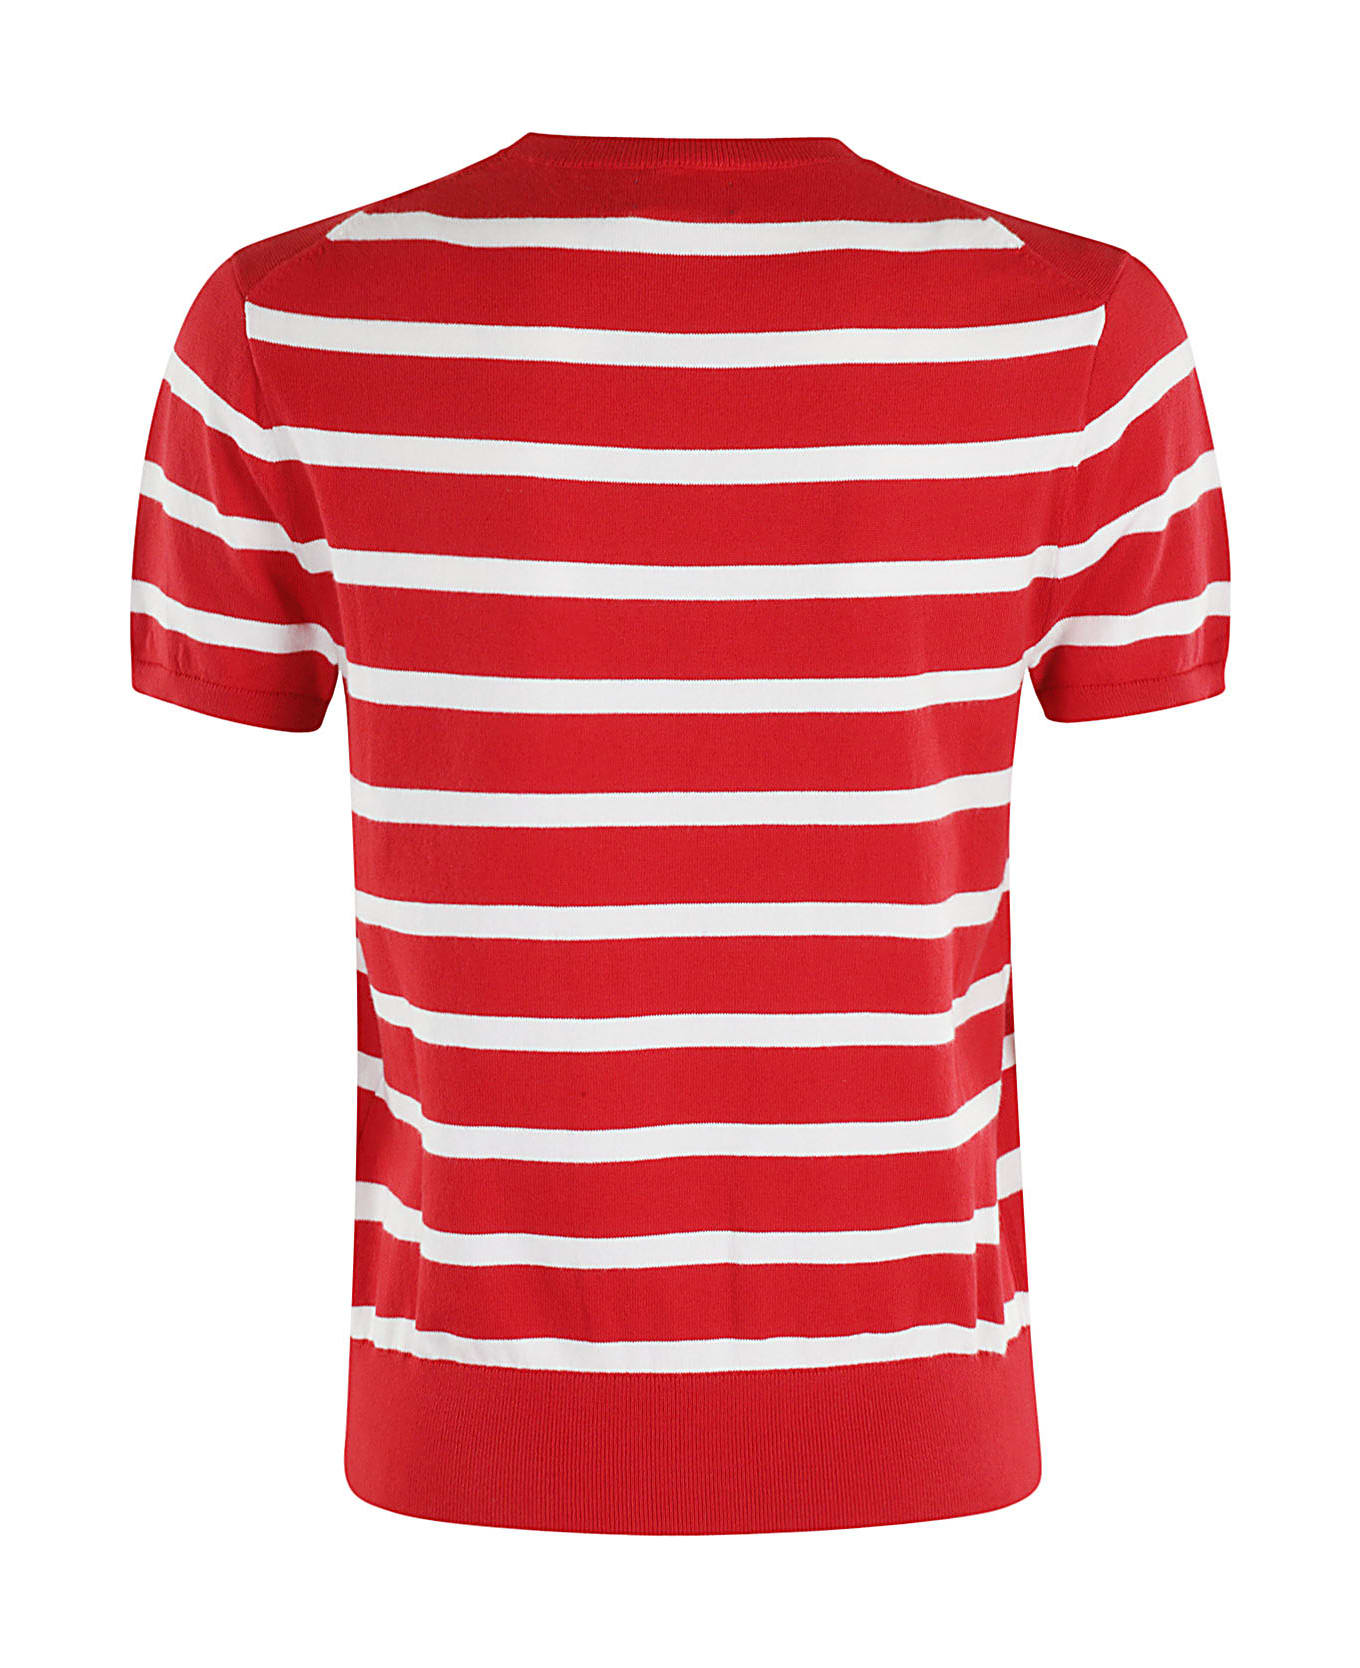 Polo Ralph Lauren Stripes - Red White